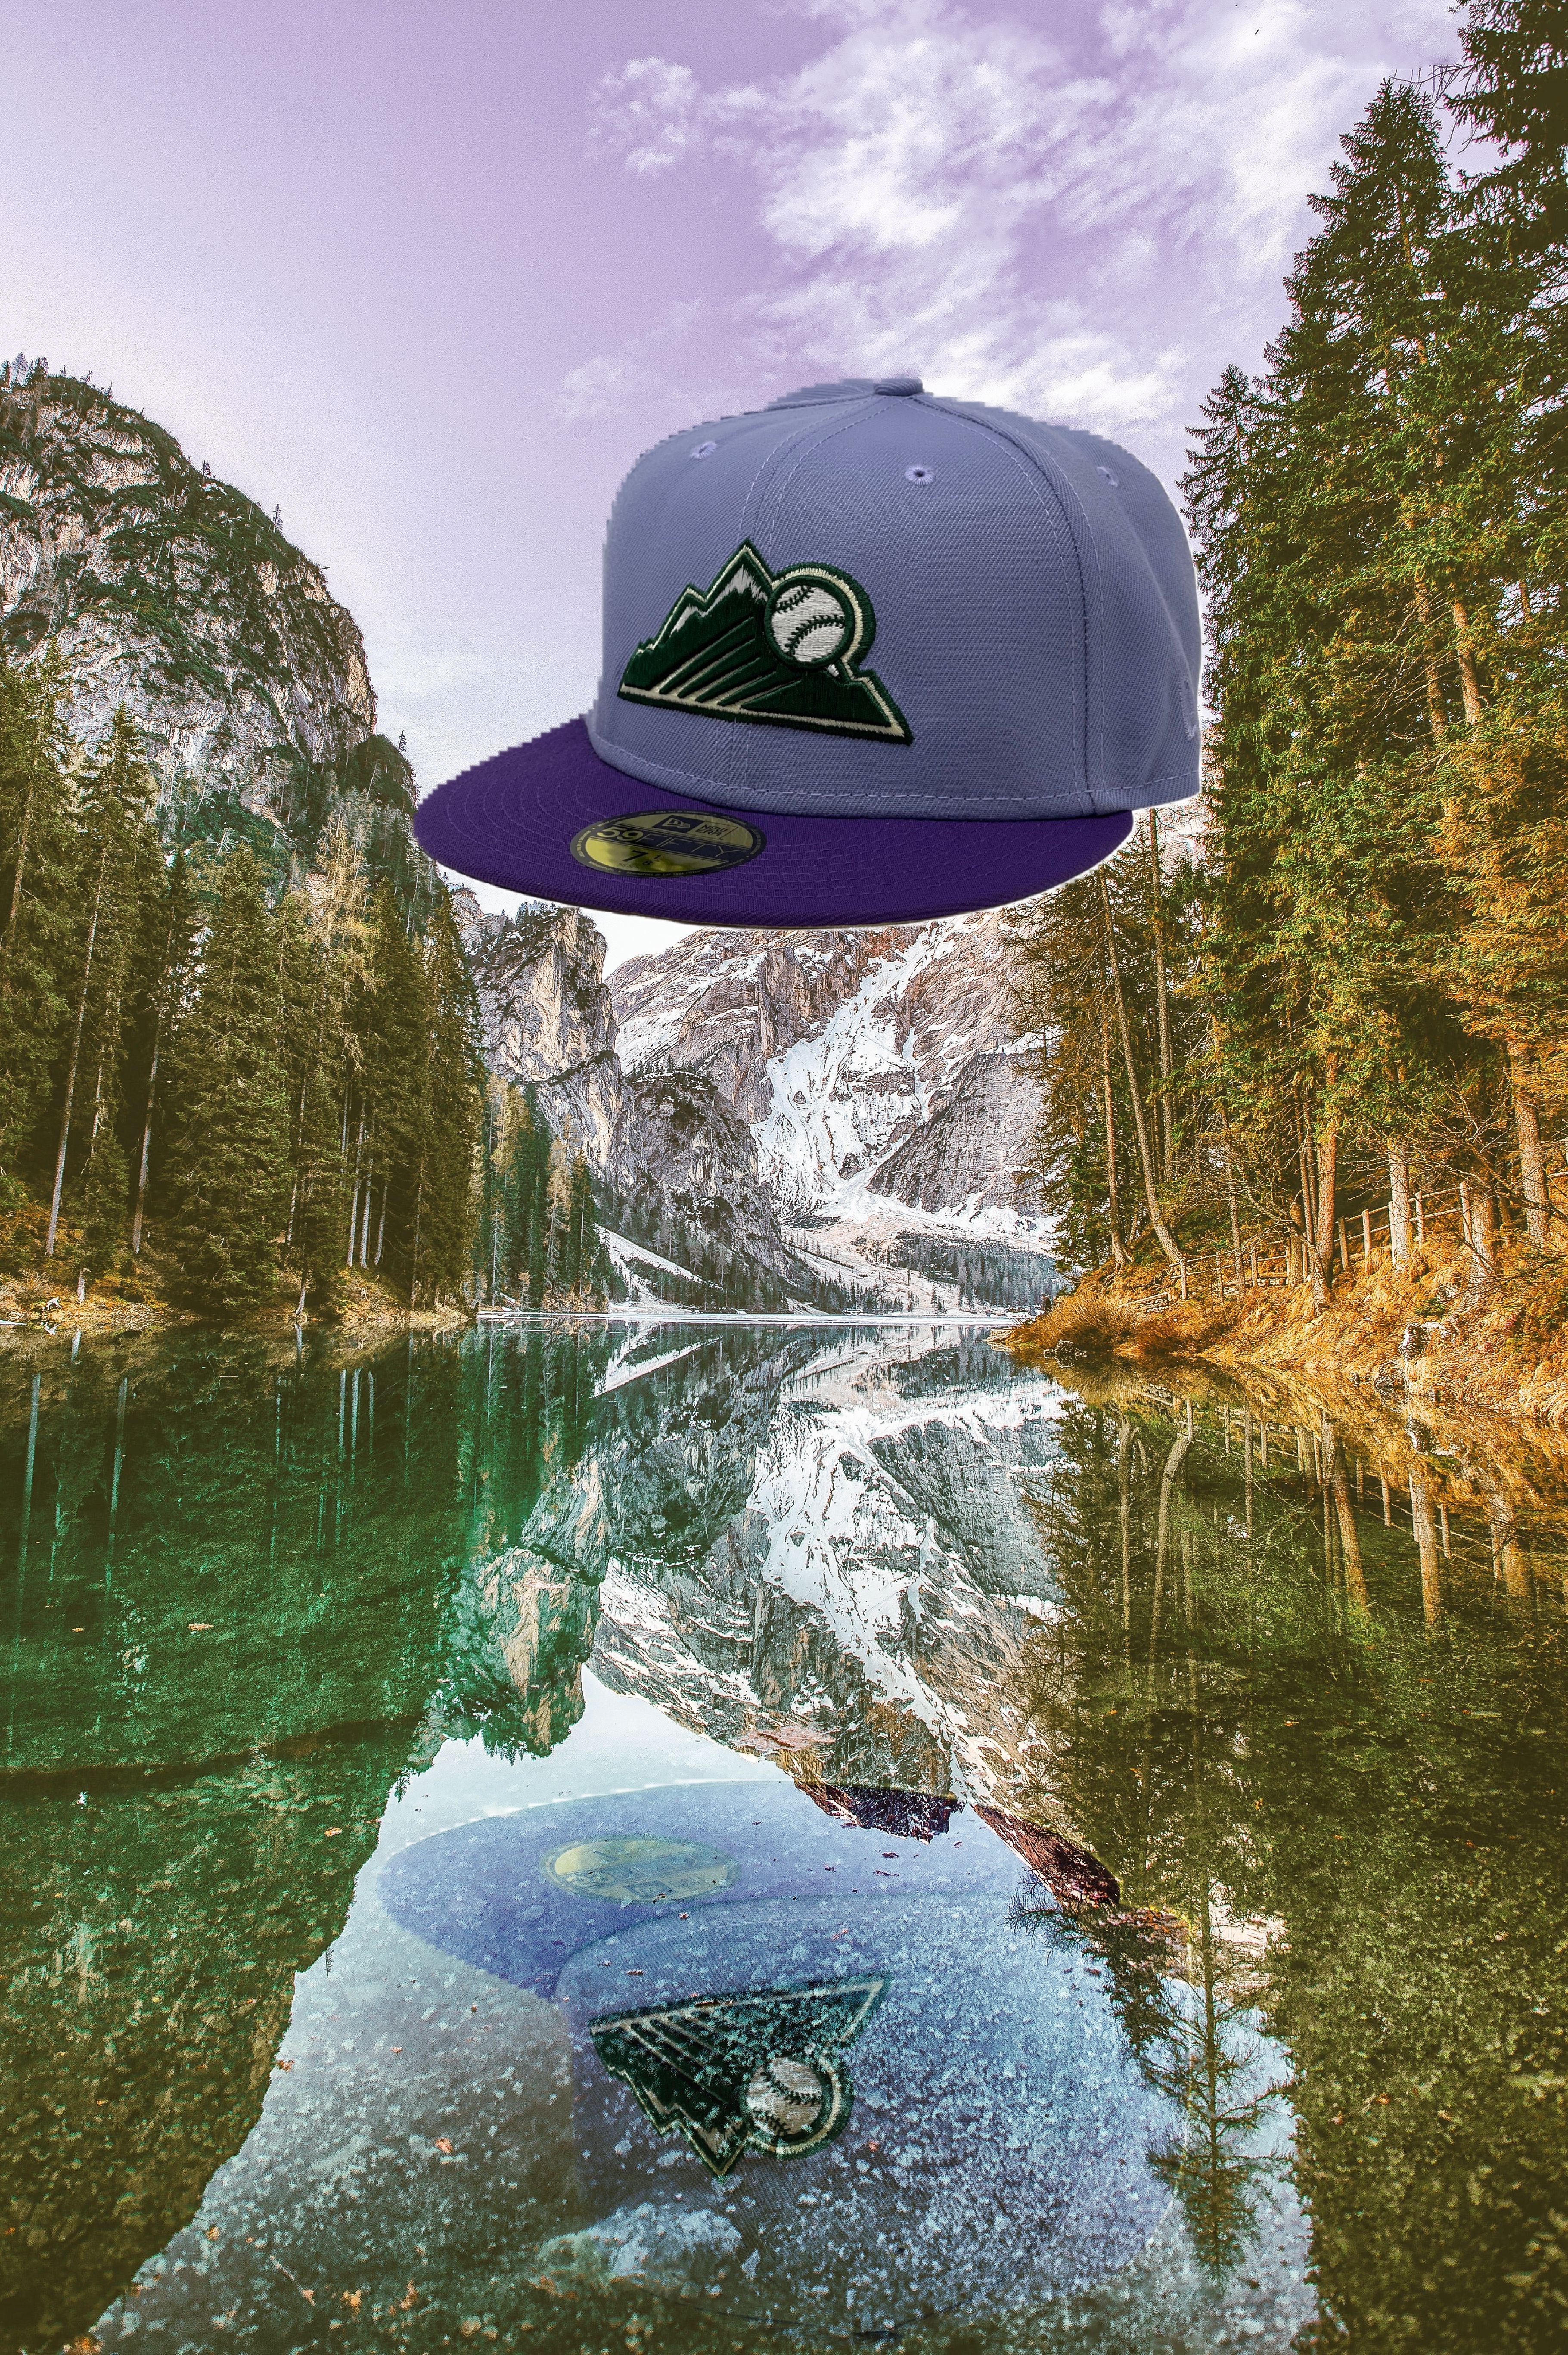 New Era Hat - Colorado Rockies - Lilac / Purple – InStyle-Tuscaloosa